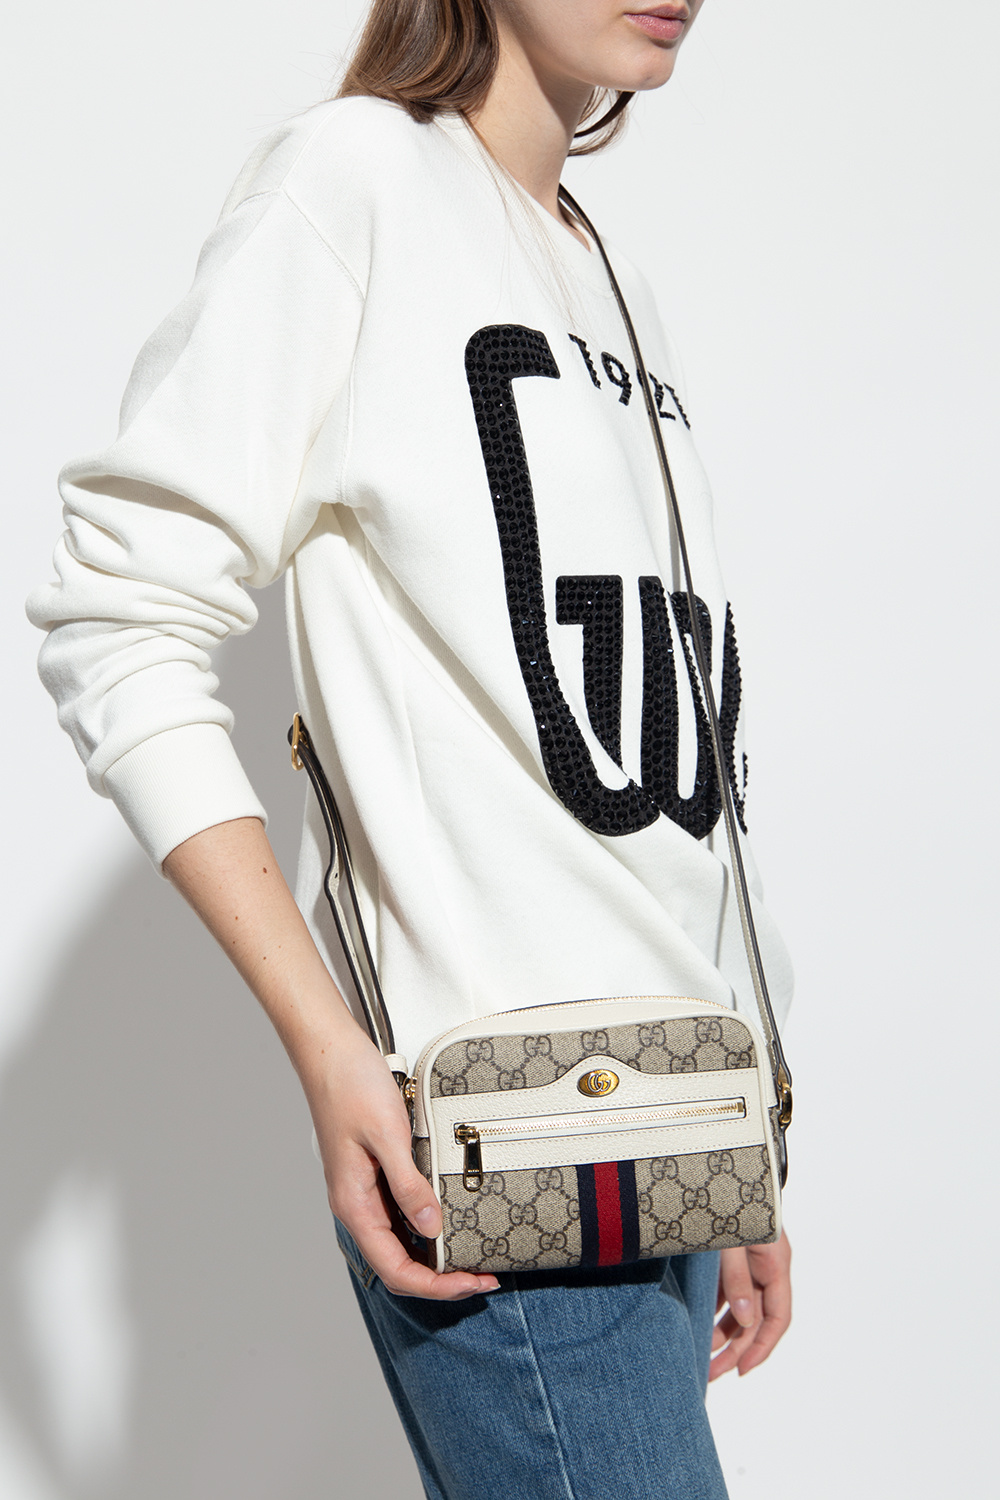 Gucci ‘Ophidia Mini’ shoulder bag